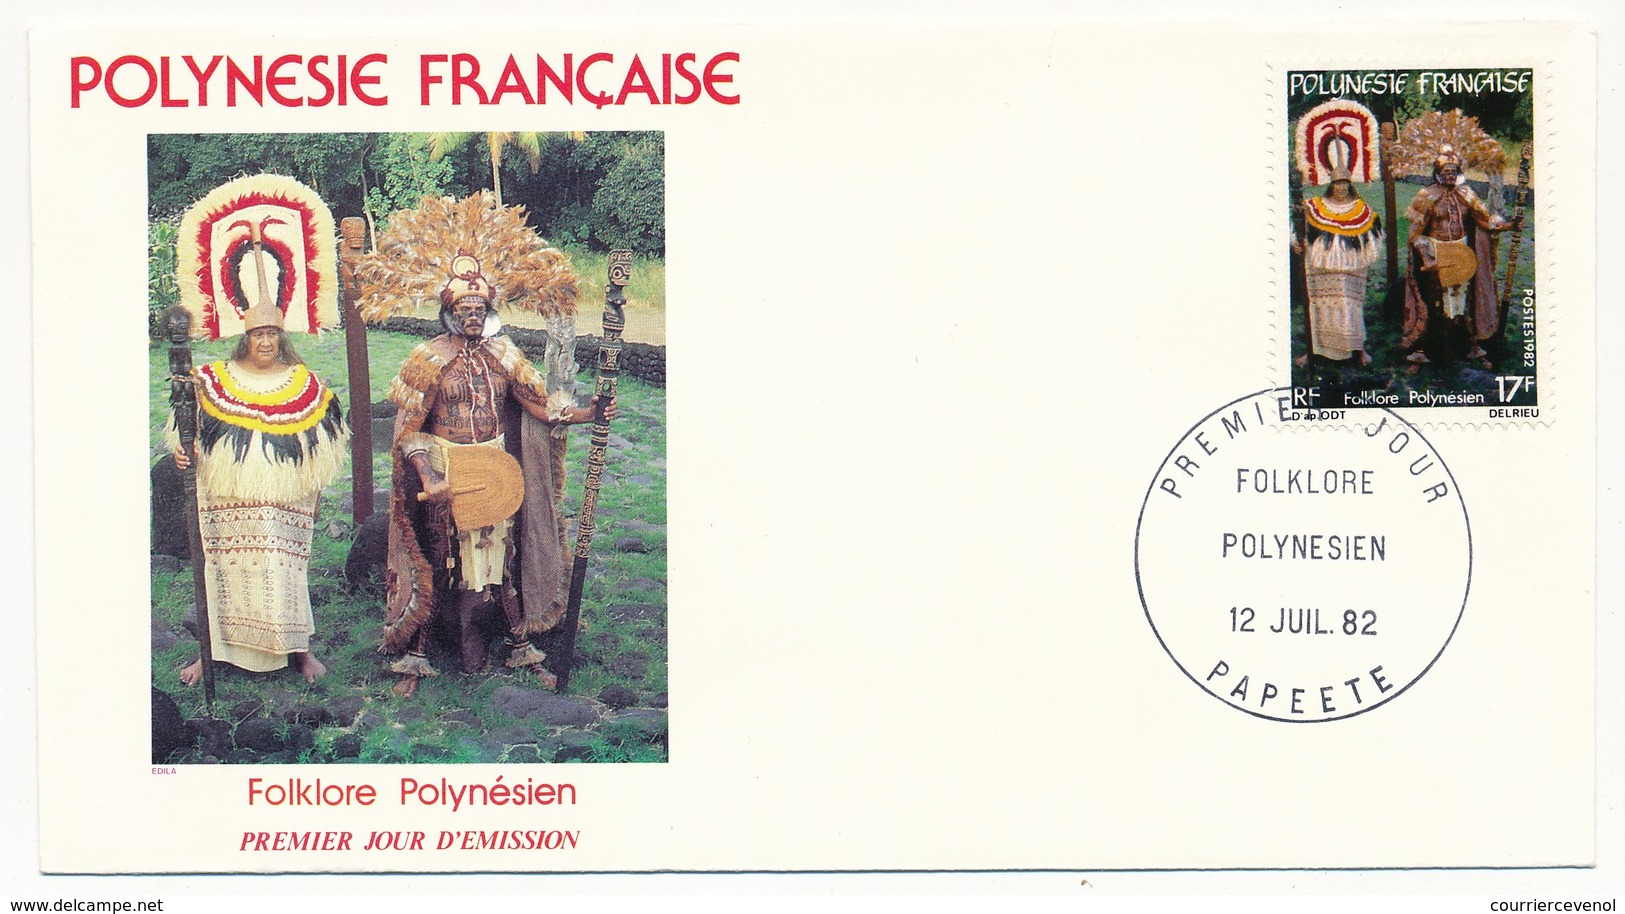 POLYNESIE FRANCAISE - 3 FDC - Folklore Polynésien - 2 Juillet 1982 - Papeete - FDC